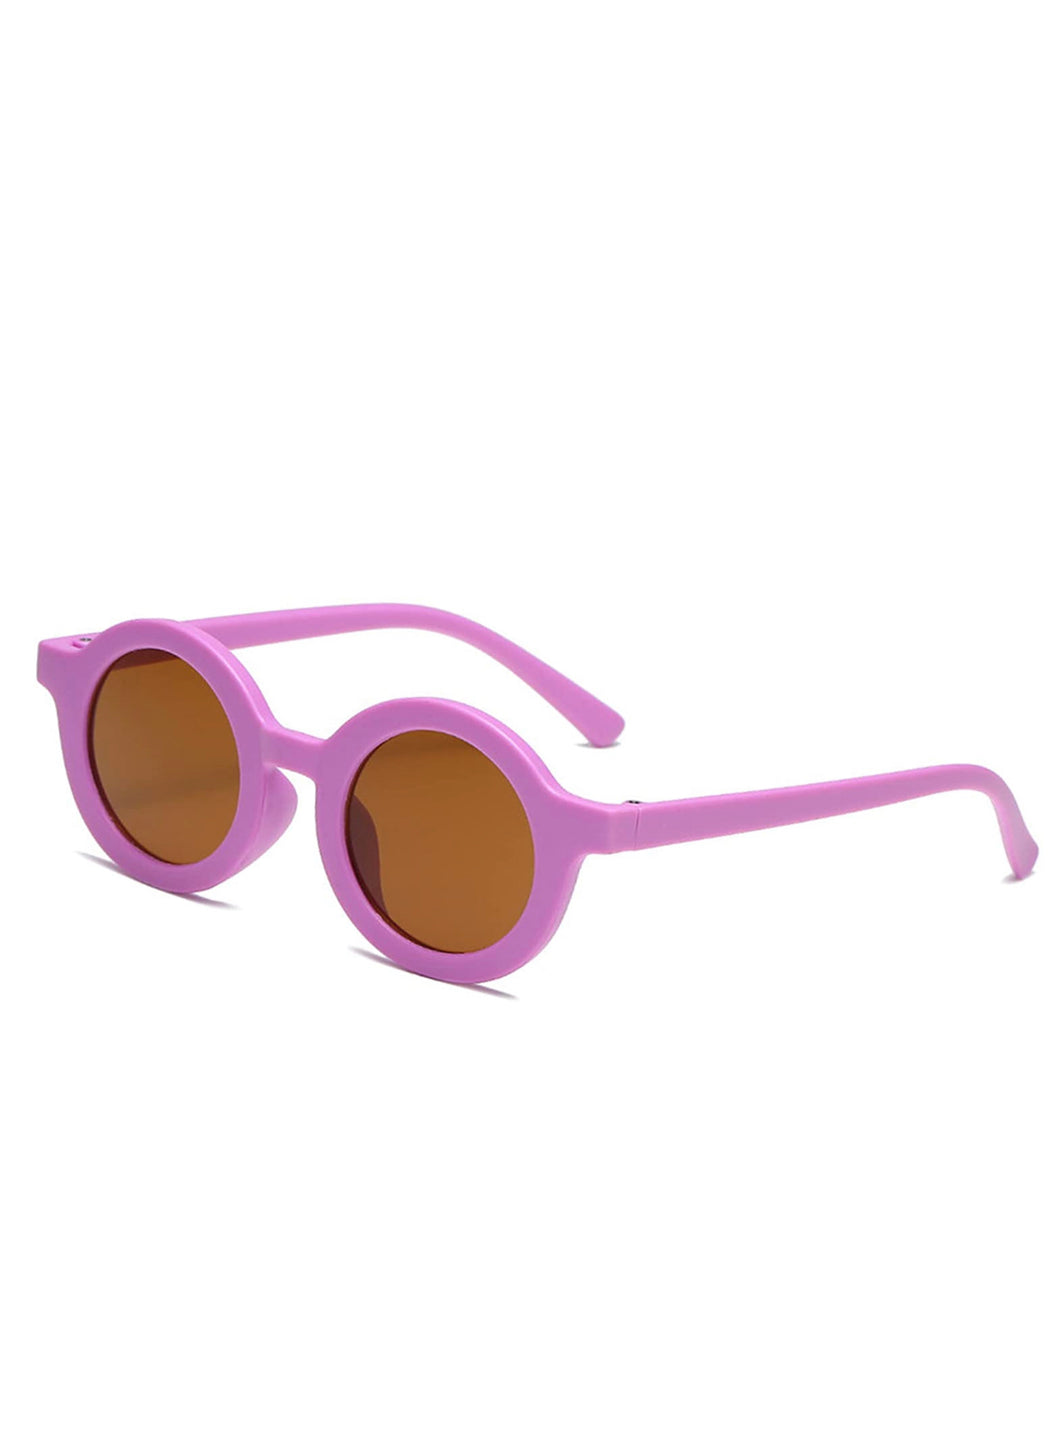 Lavender Round Frame Sunglasses